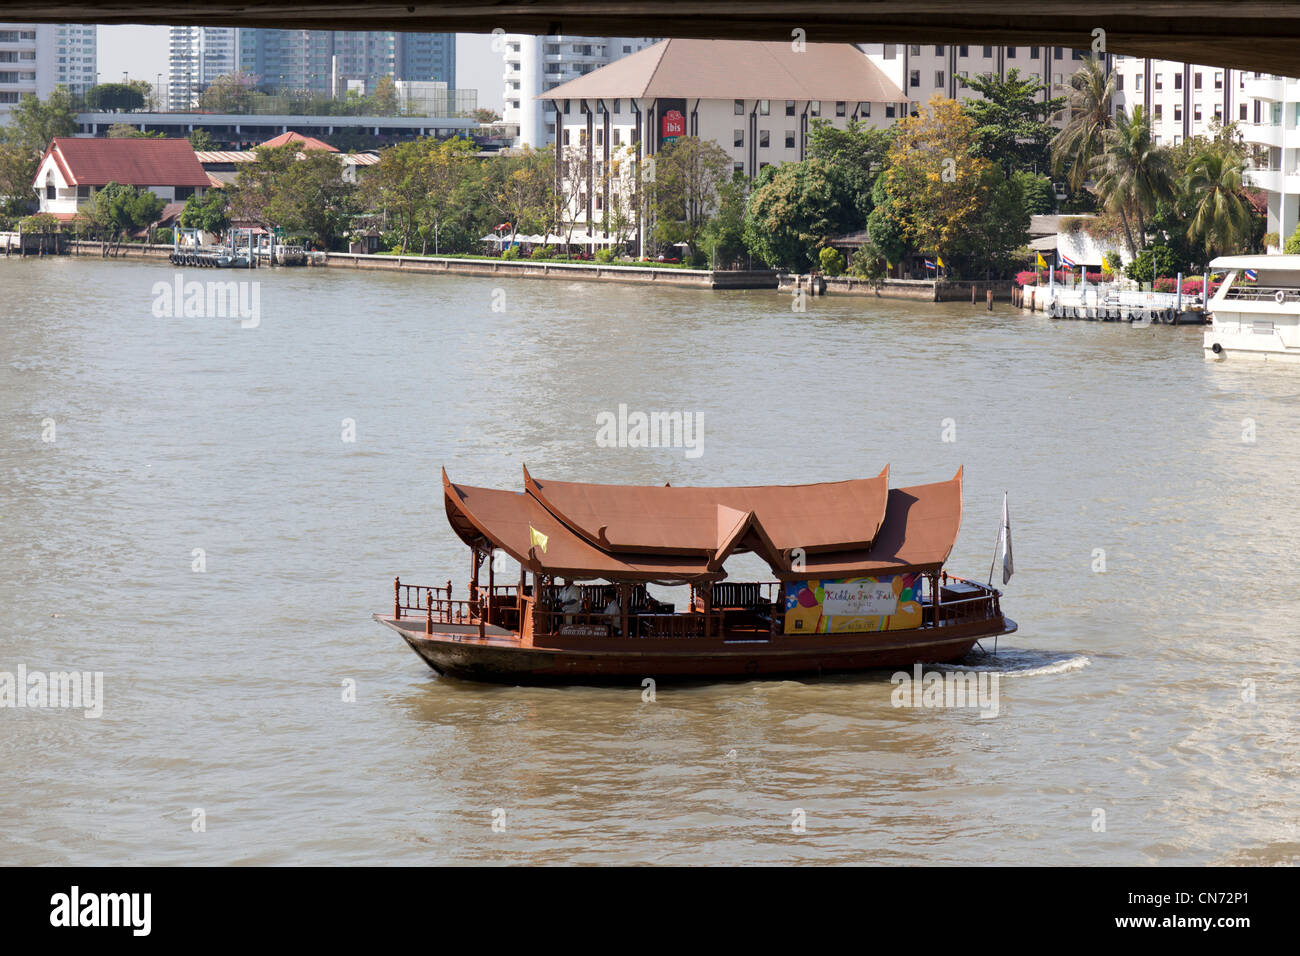 Un pittoresco hotel shuttle barca sul fiume Chao Phraya (Bangkok) pittoresco bateau-navette d'hôtel sur le fleuve Chao Phraya Foto Stock